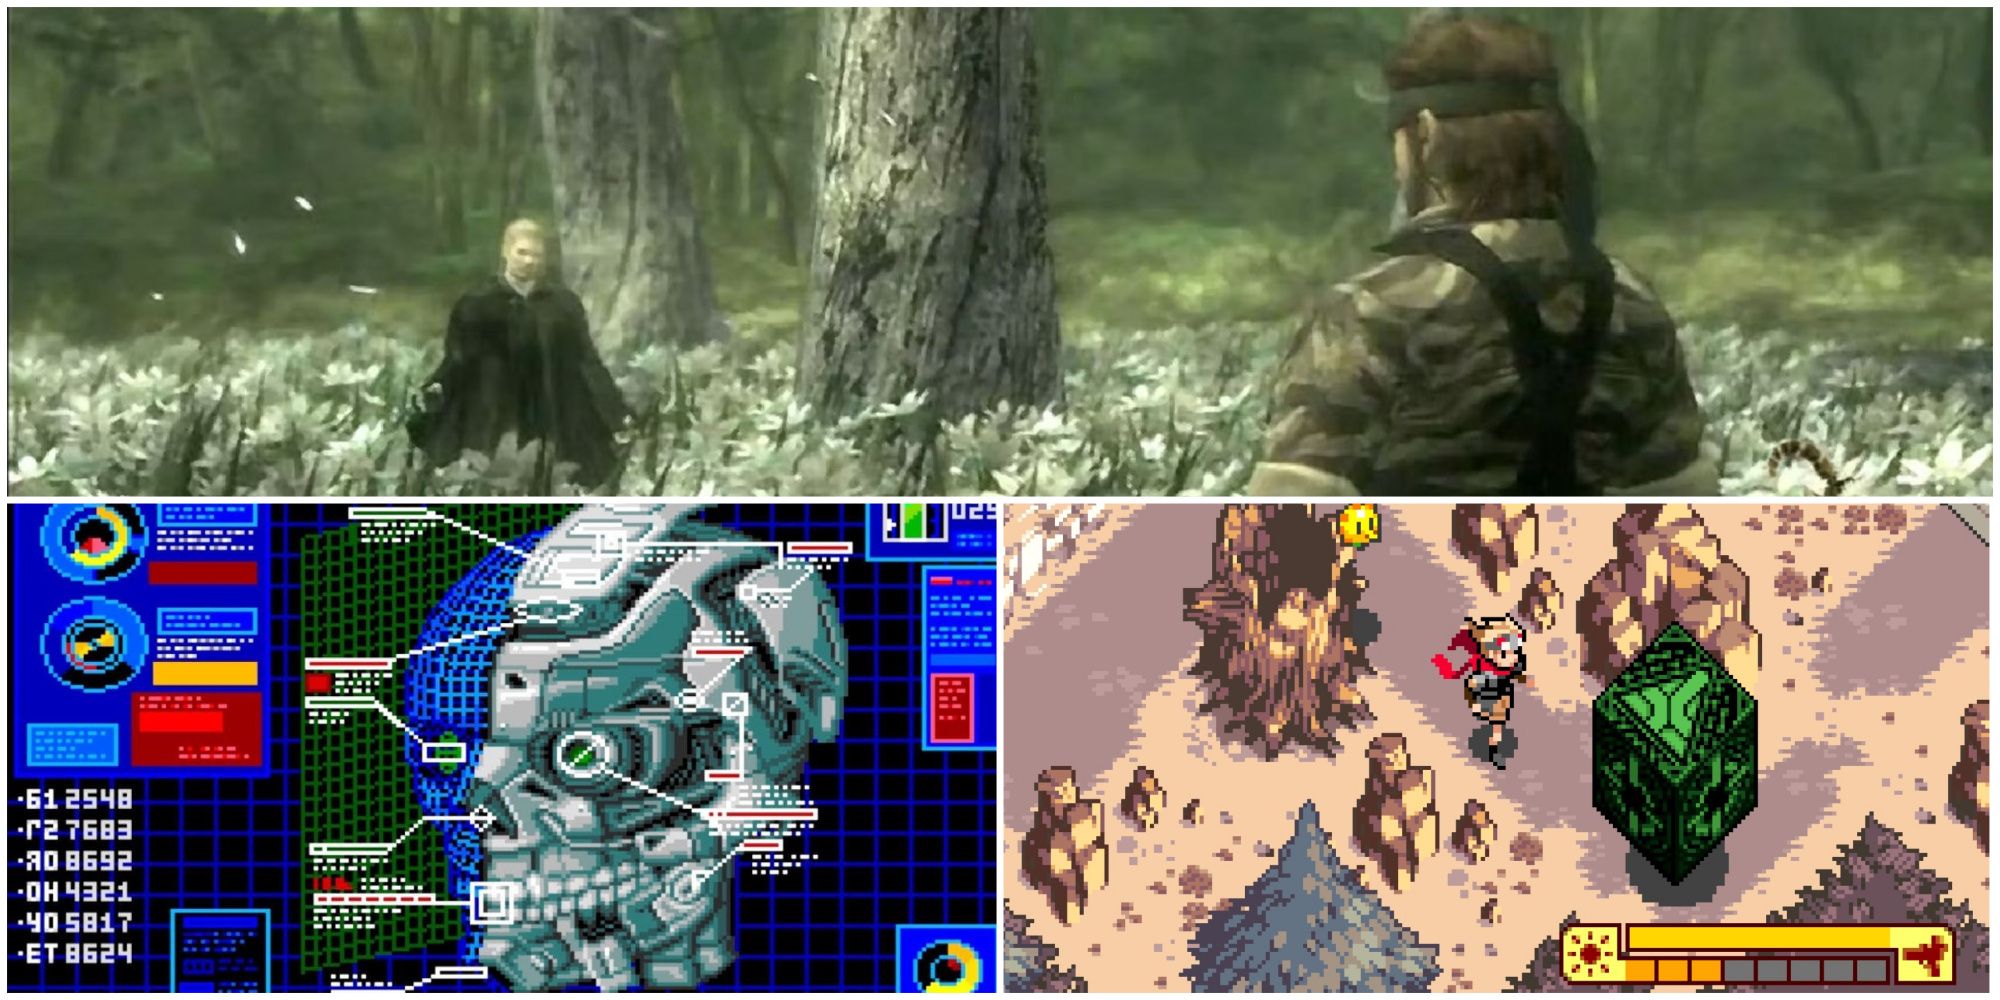 Best Hideo Kojima Games- Metal Gear Solid 3 Snatcher Boktai